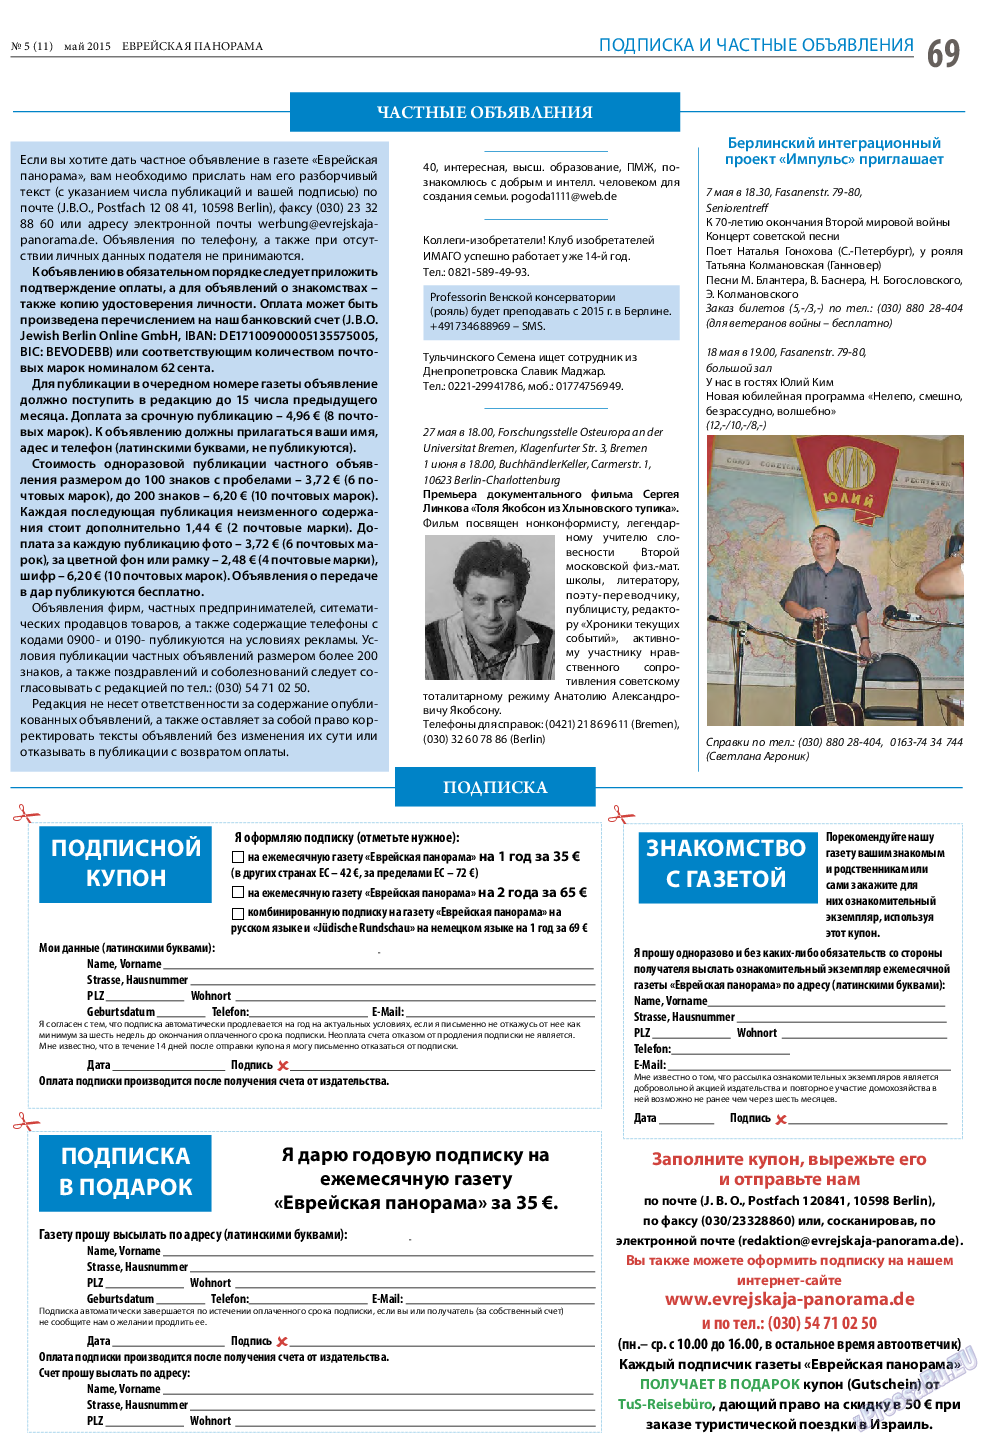 Еврейская панорама, газета. 2015 №5 стр.69